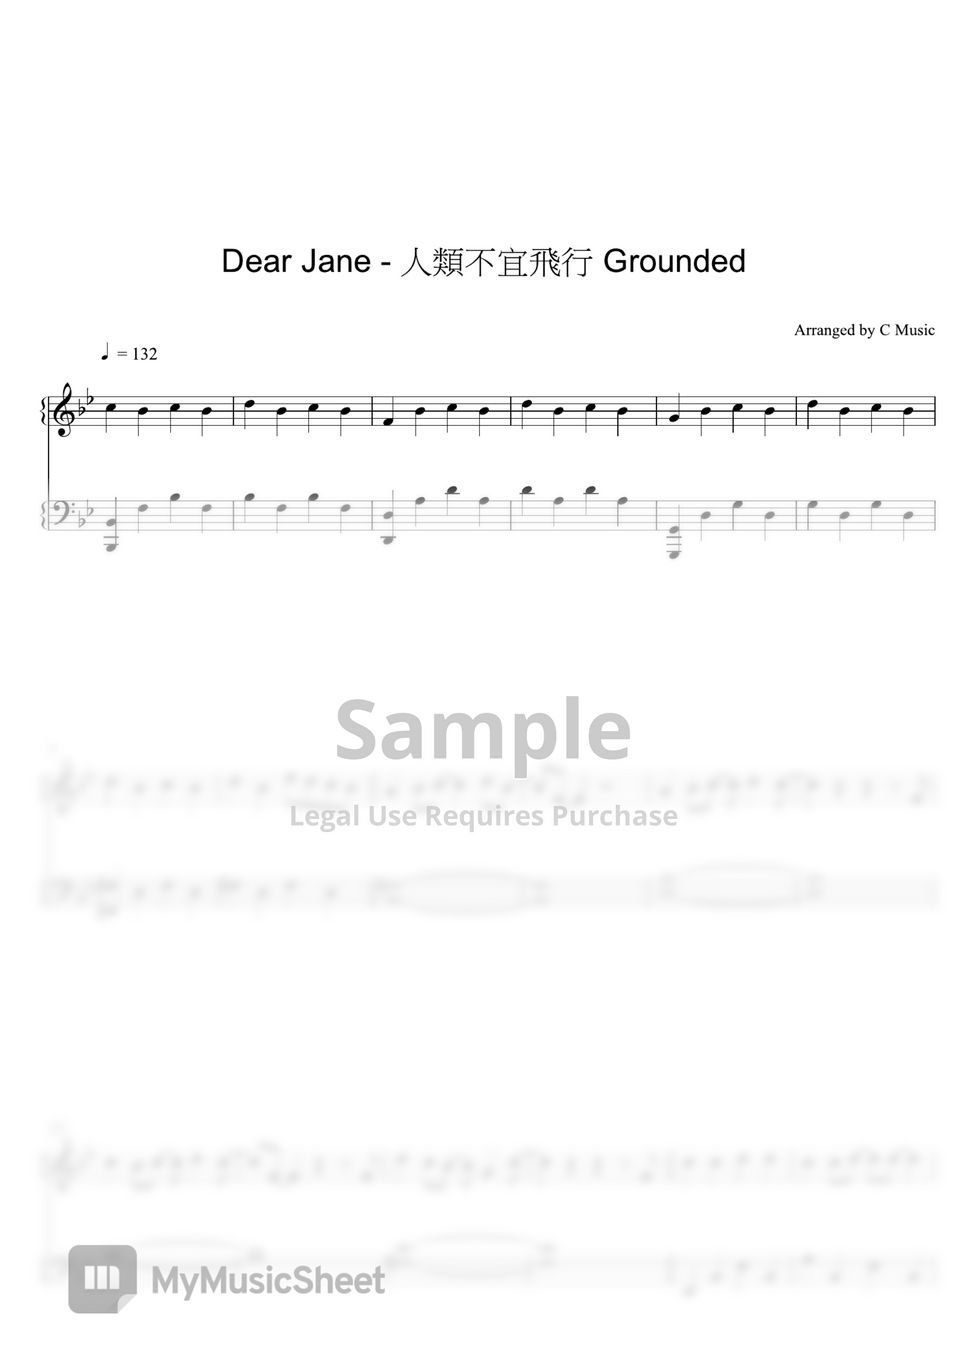 Dear Jane - 人類不宜飛行 Grounded by C Music